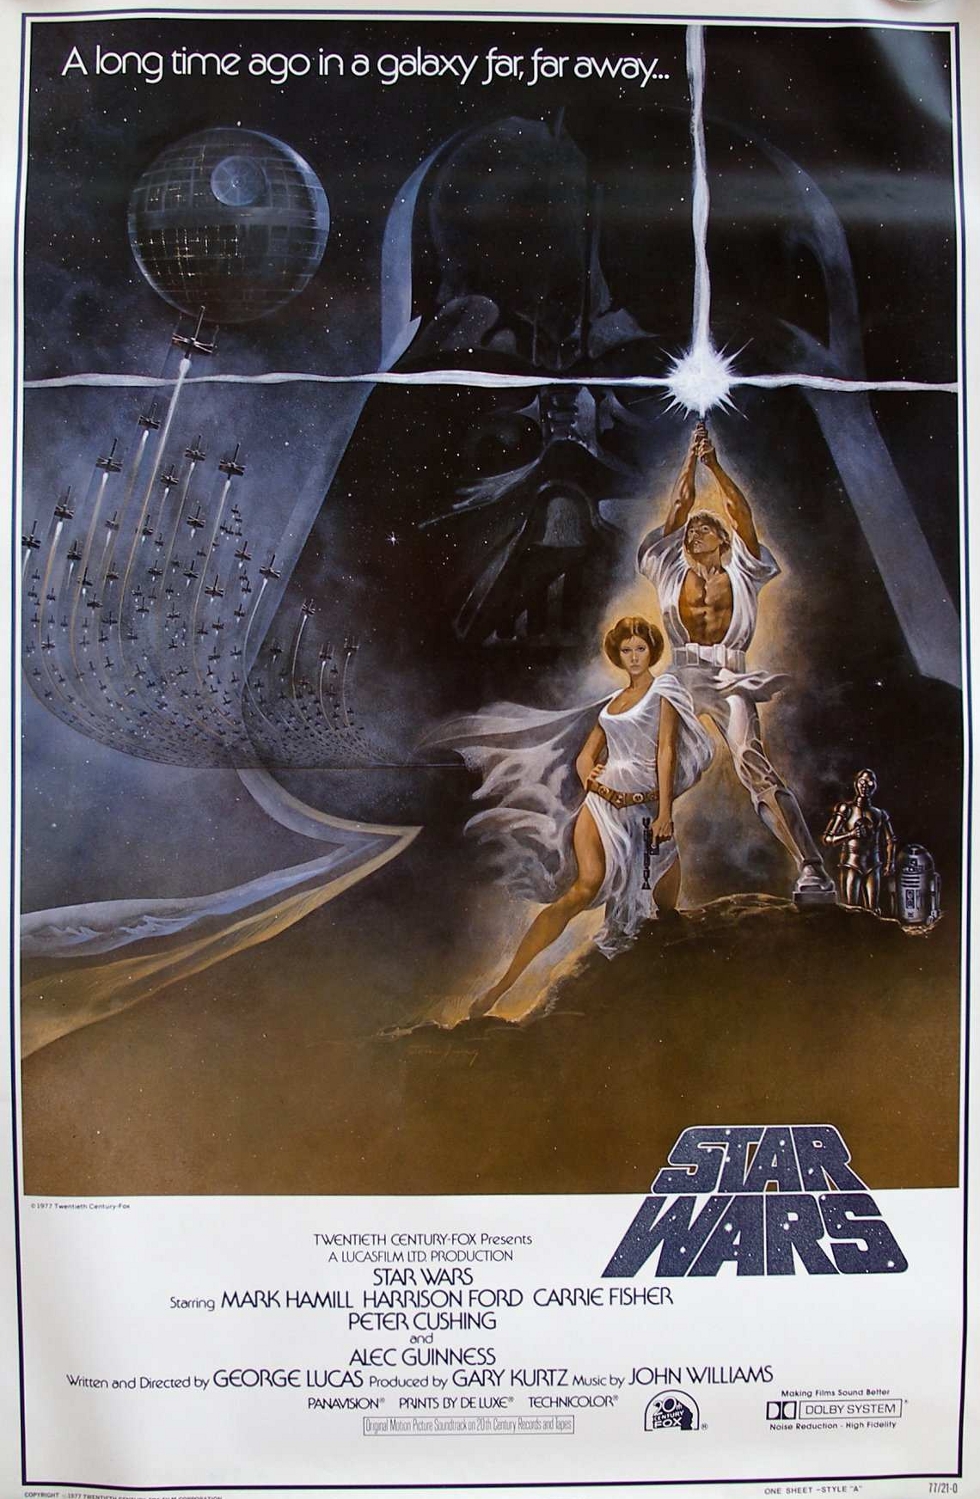 1977 Star Wars Poster